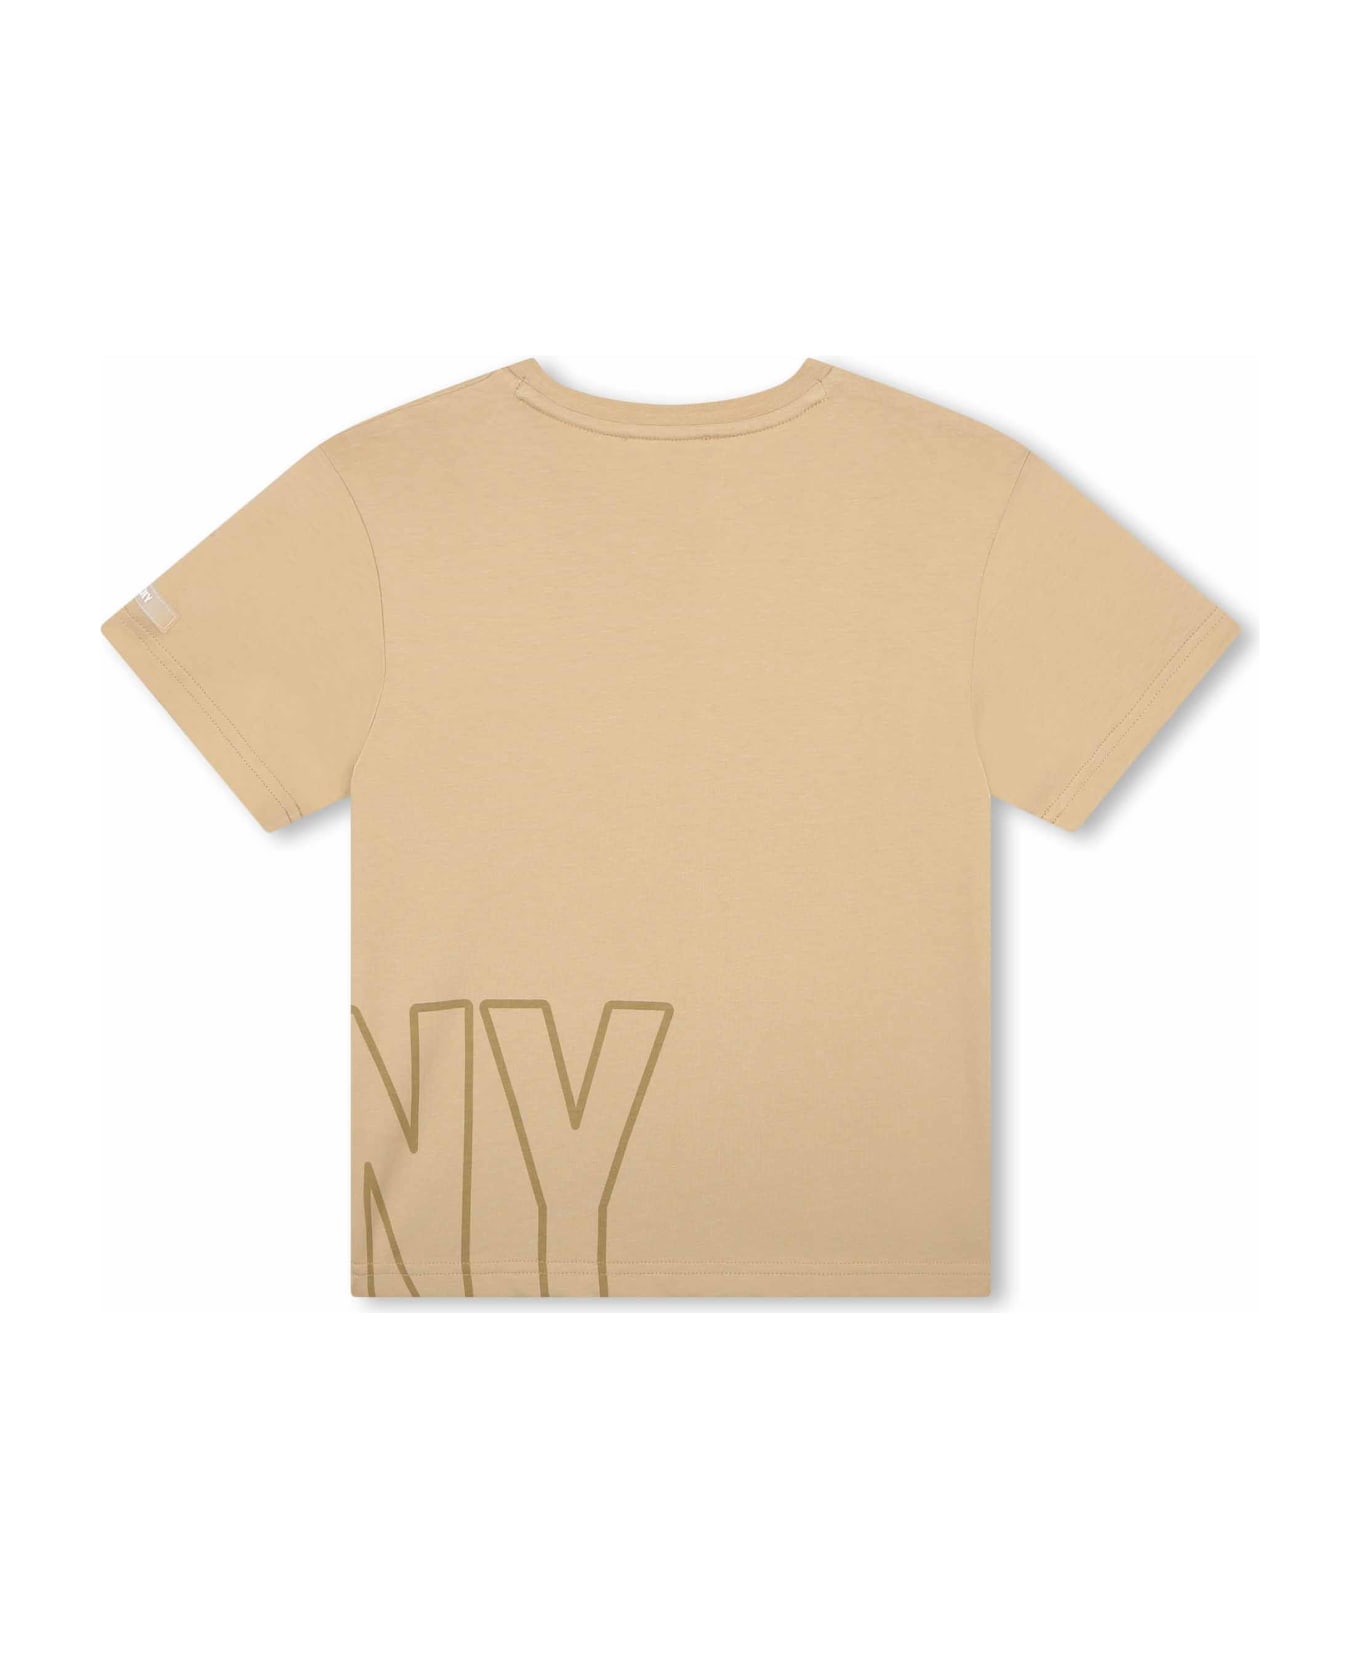 DKNY Printed T-shirt - C Stone